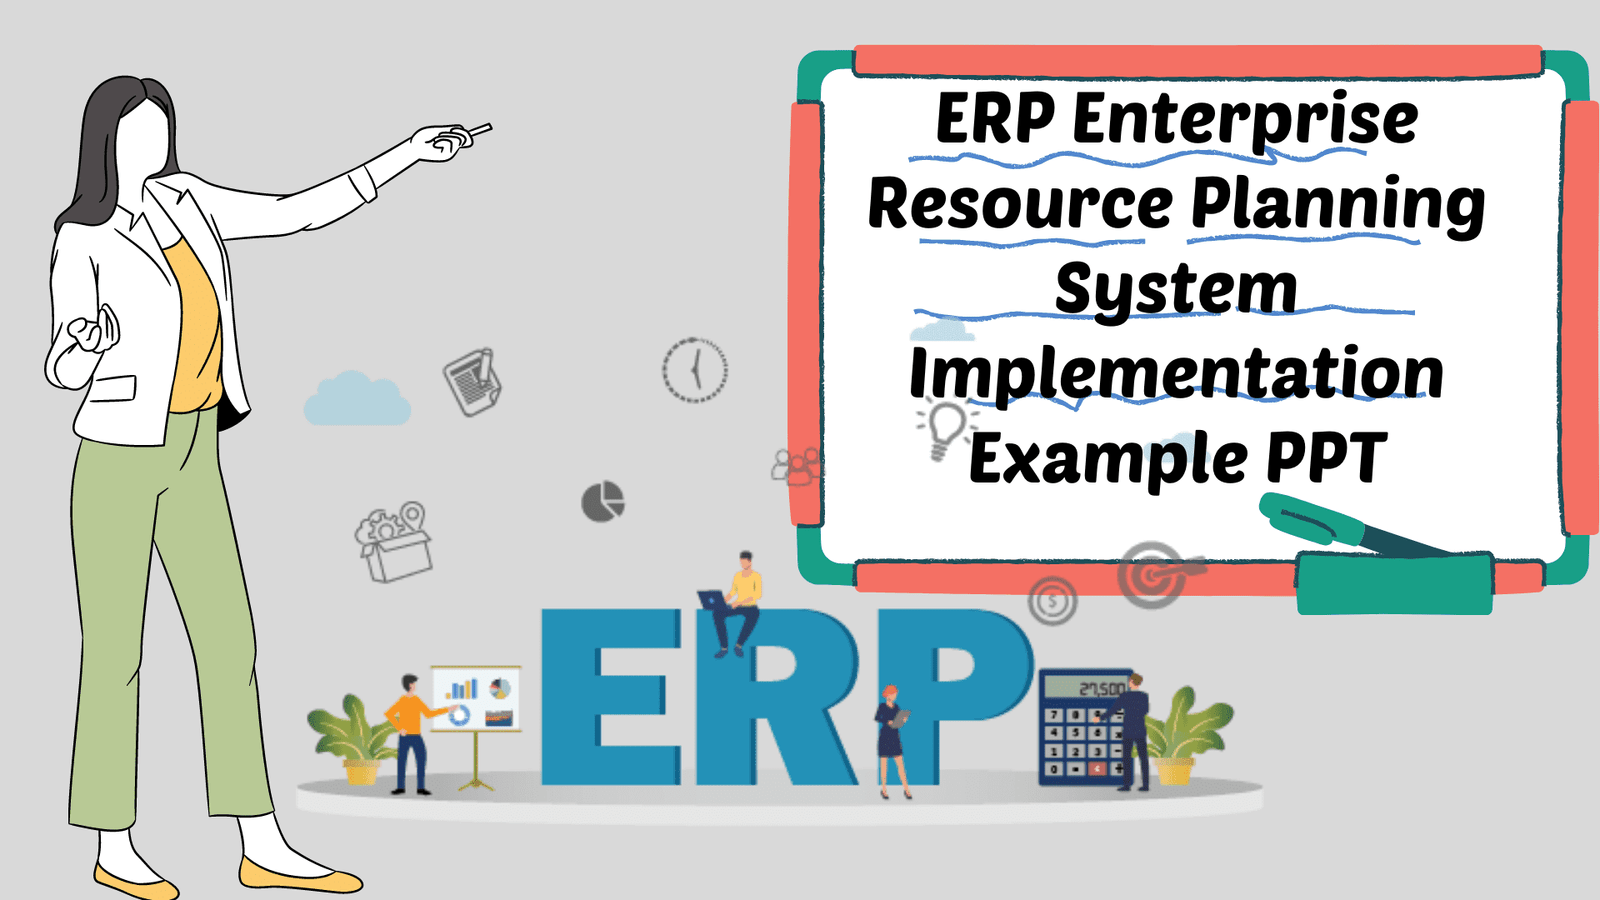 ERP Enterprise Resource Planning System Implementation Example PPT Image